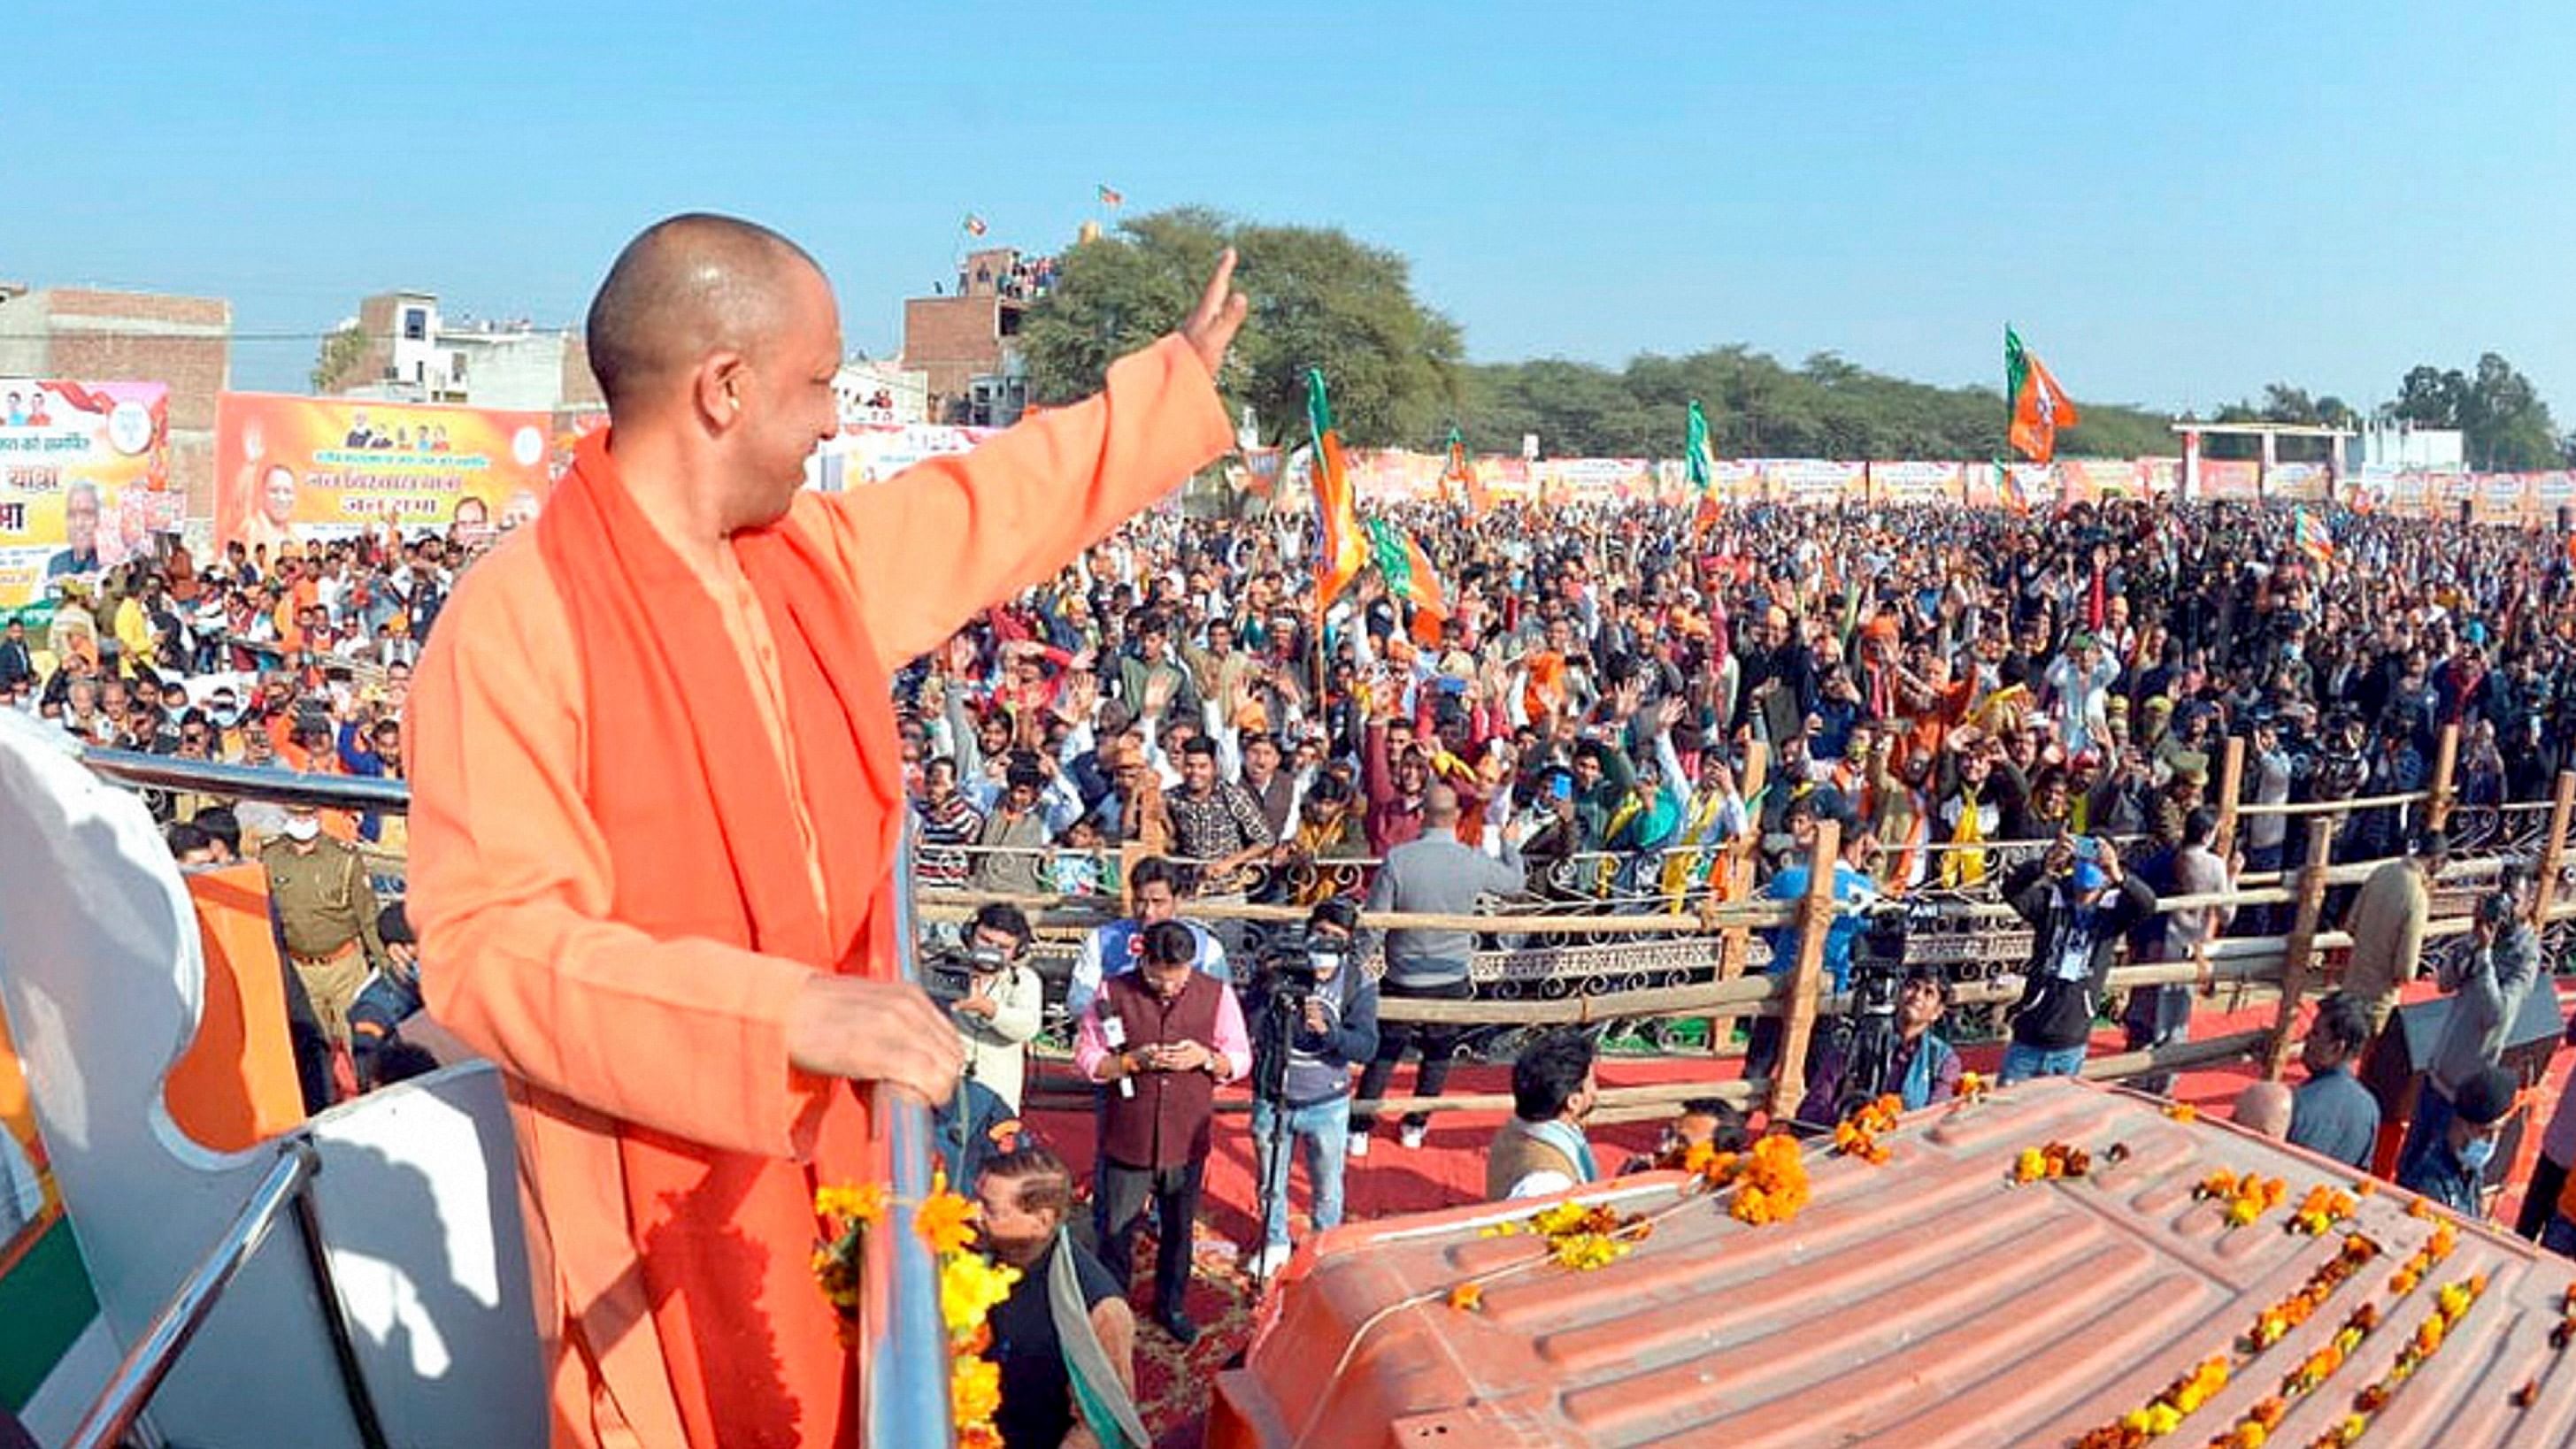 Uttar Pradesh Chief Minister Yogi Adityanath waves towards supporters during the inauguration of BJP's 'Jan Vishwas Yatra' ahead of the 2022 UP elections. Credit: Twitter/@myogiadityanath